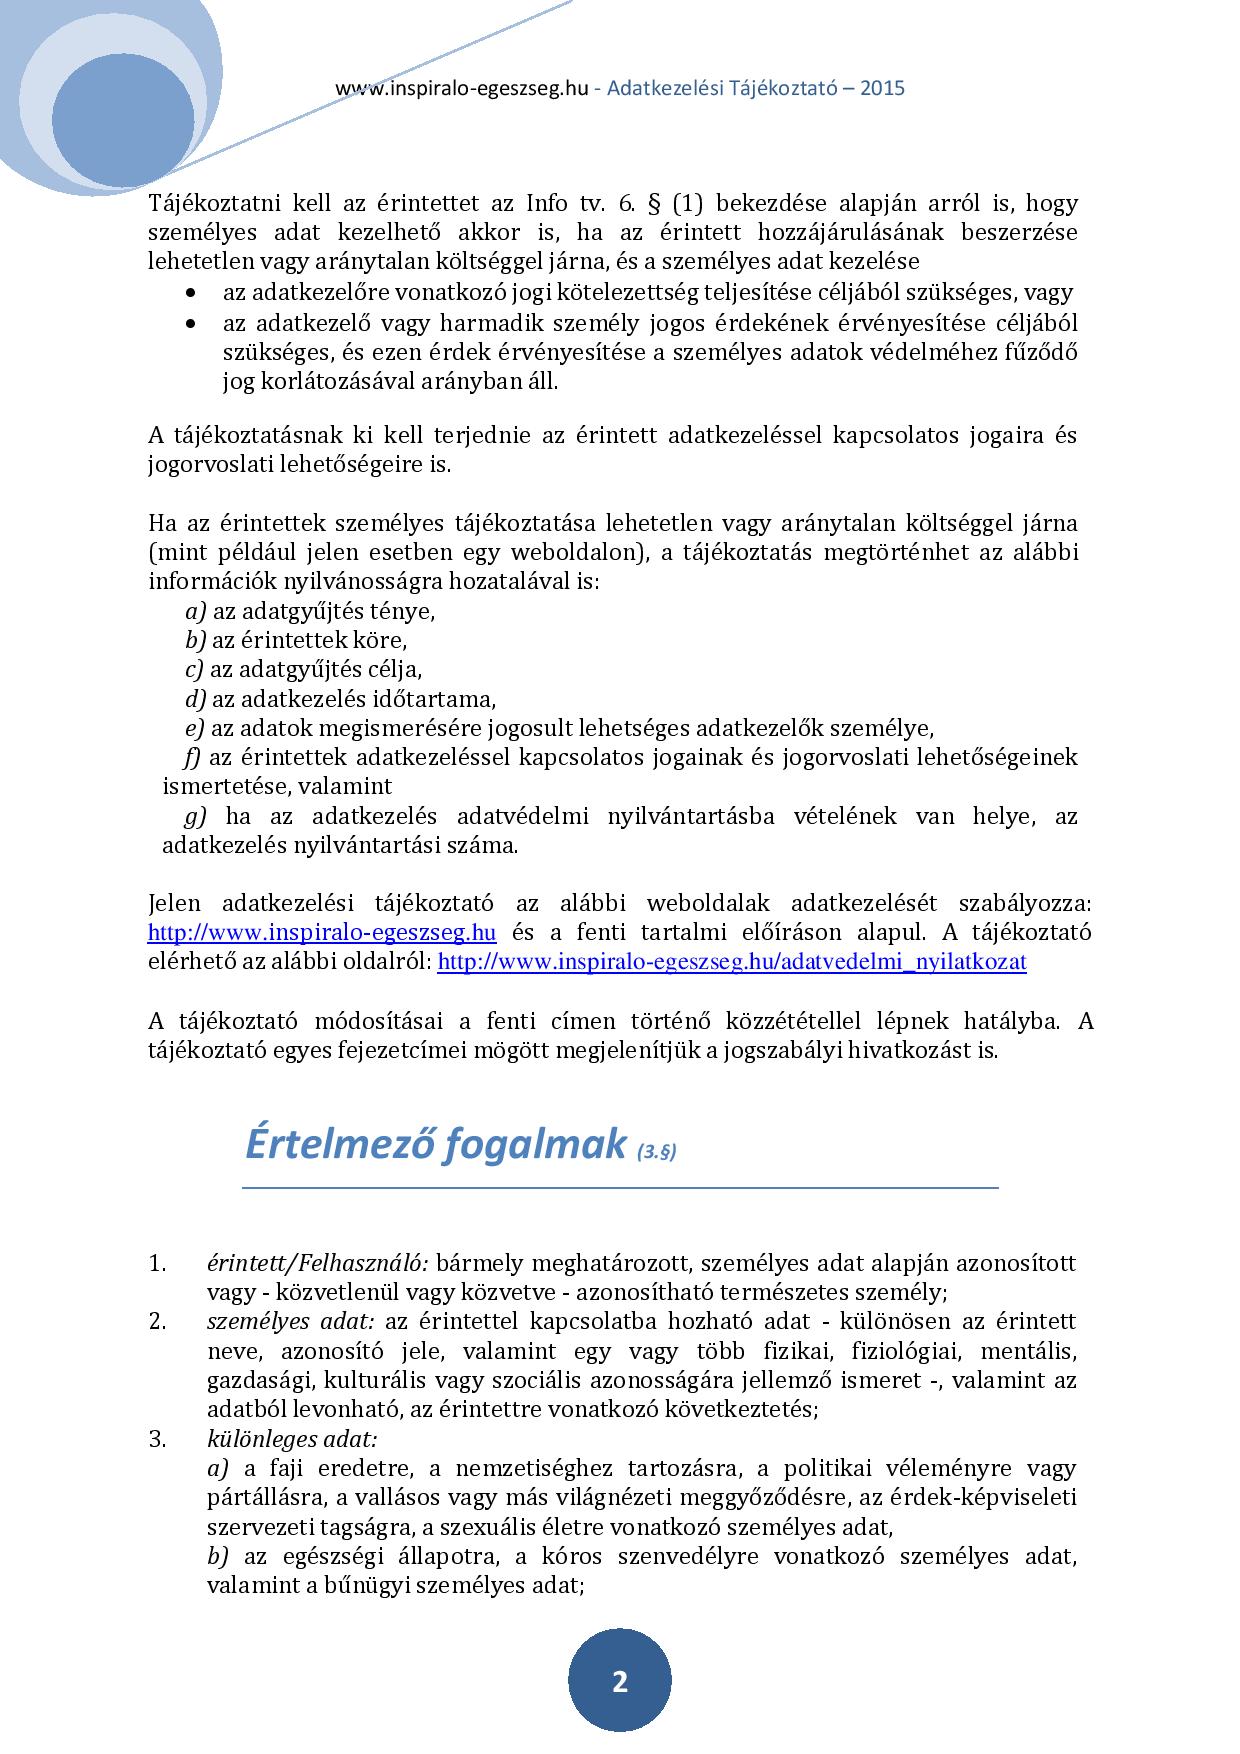 egri-anna-inspiralo-egeszseg-adatvedelmi-page-001